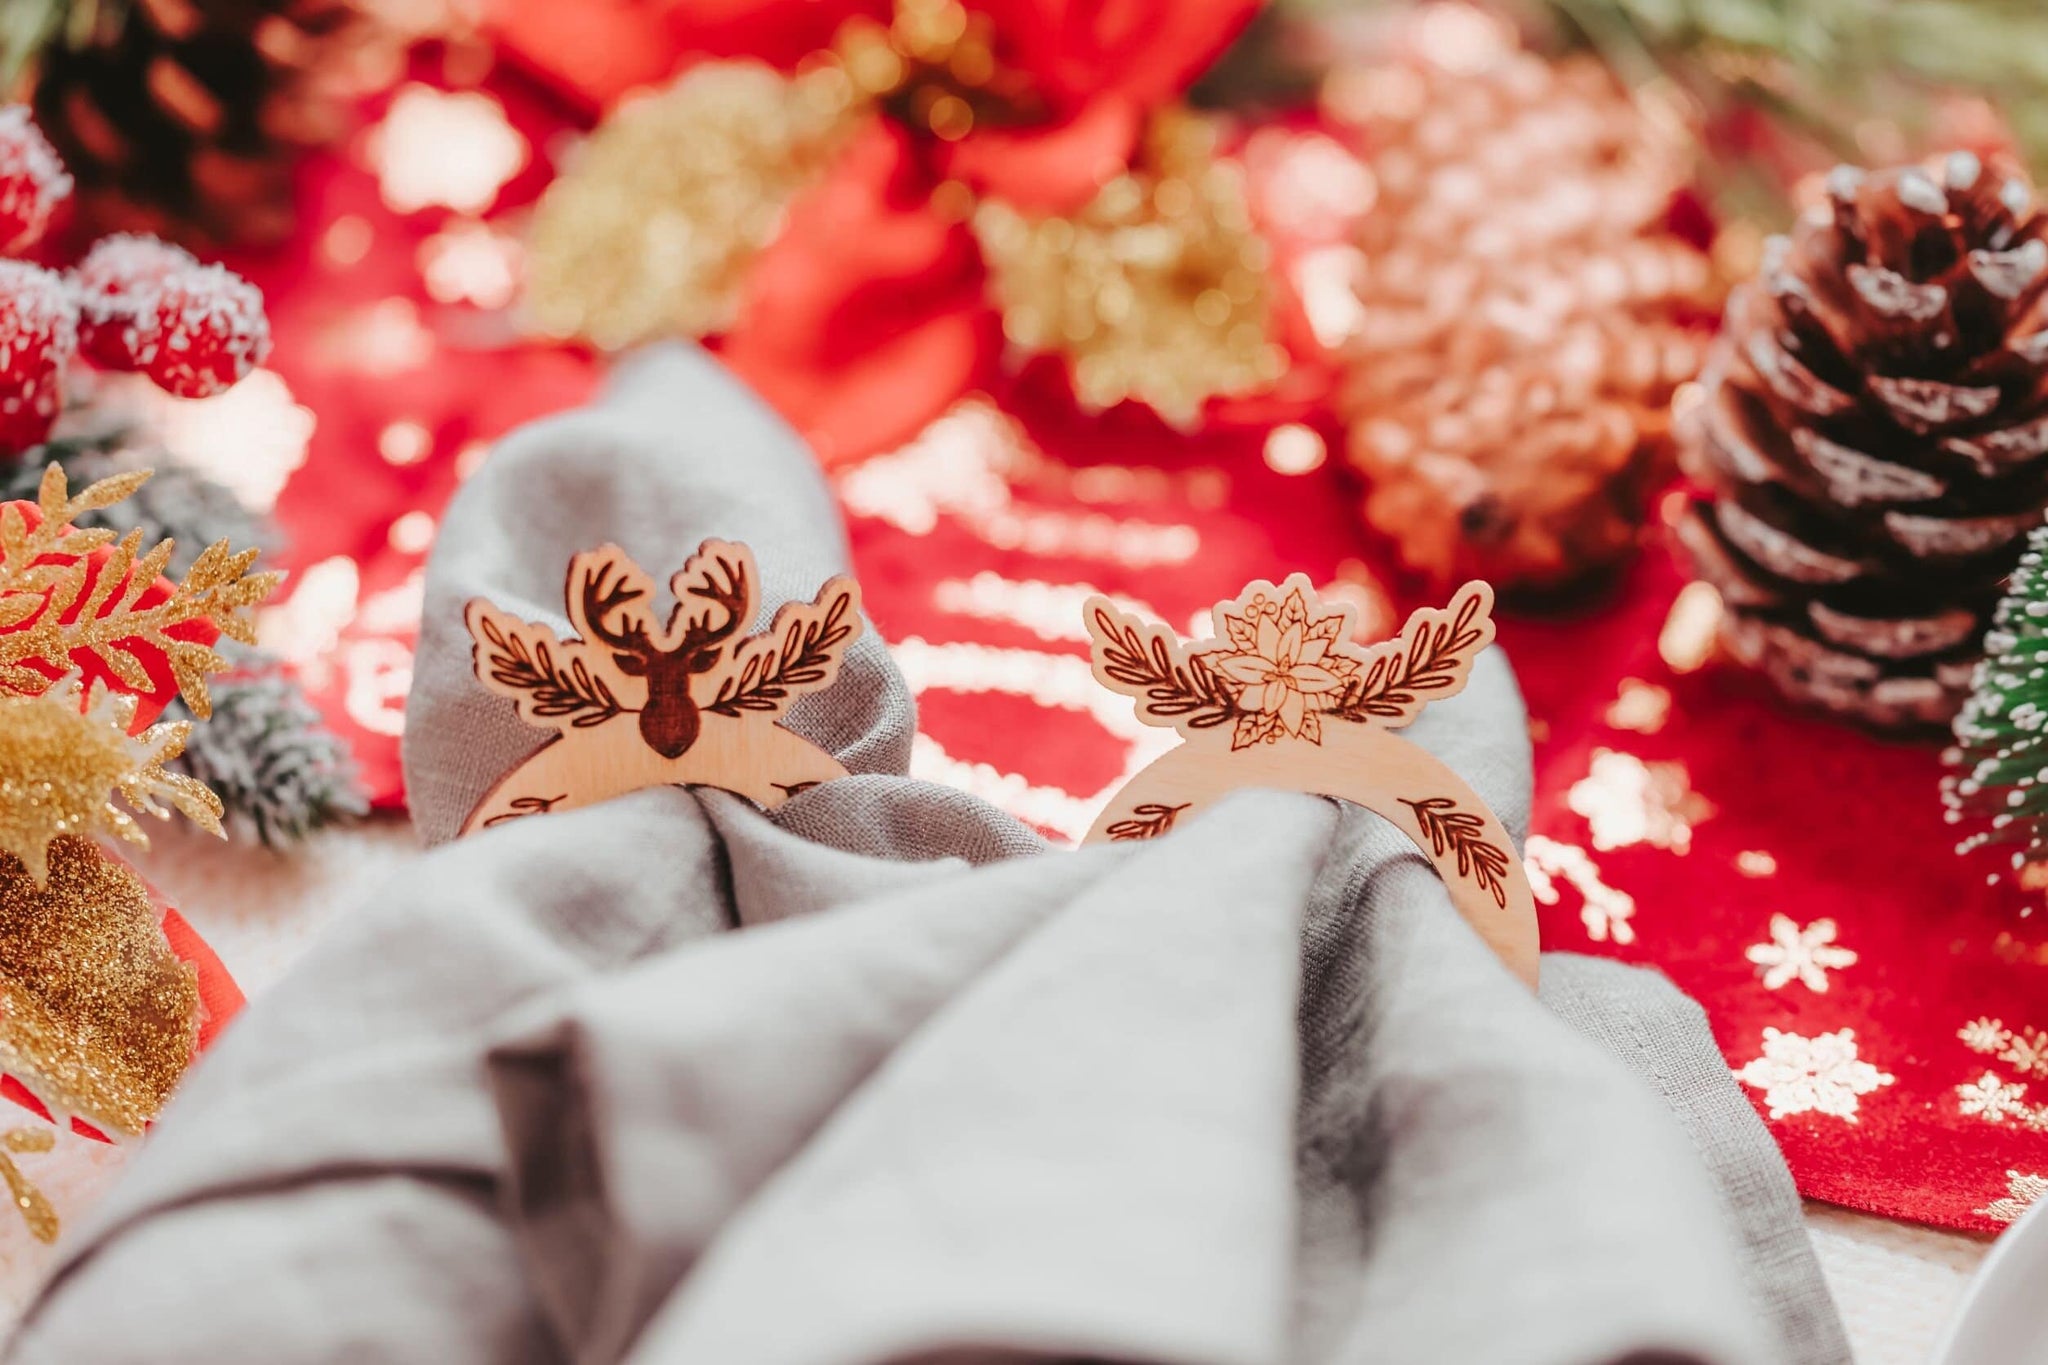 Cute Christmas Poinsettia Or Deer Head Wooden Napkin Ring Holders Table Decor, Wooden Napkin Holders Rings For Christmas Day Dinner